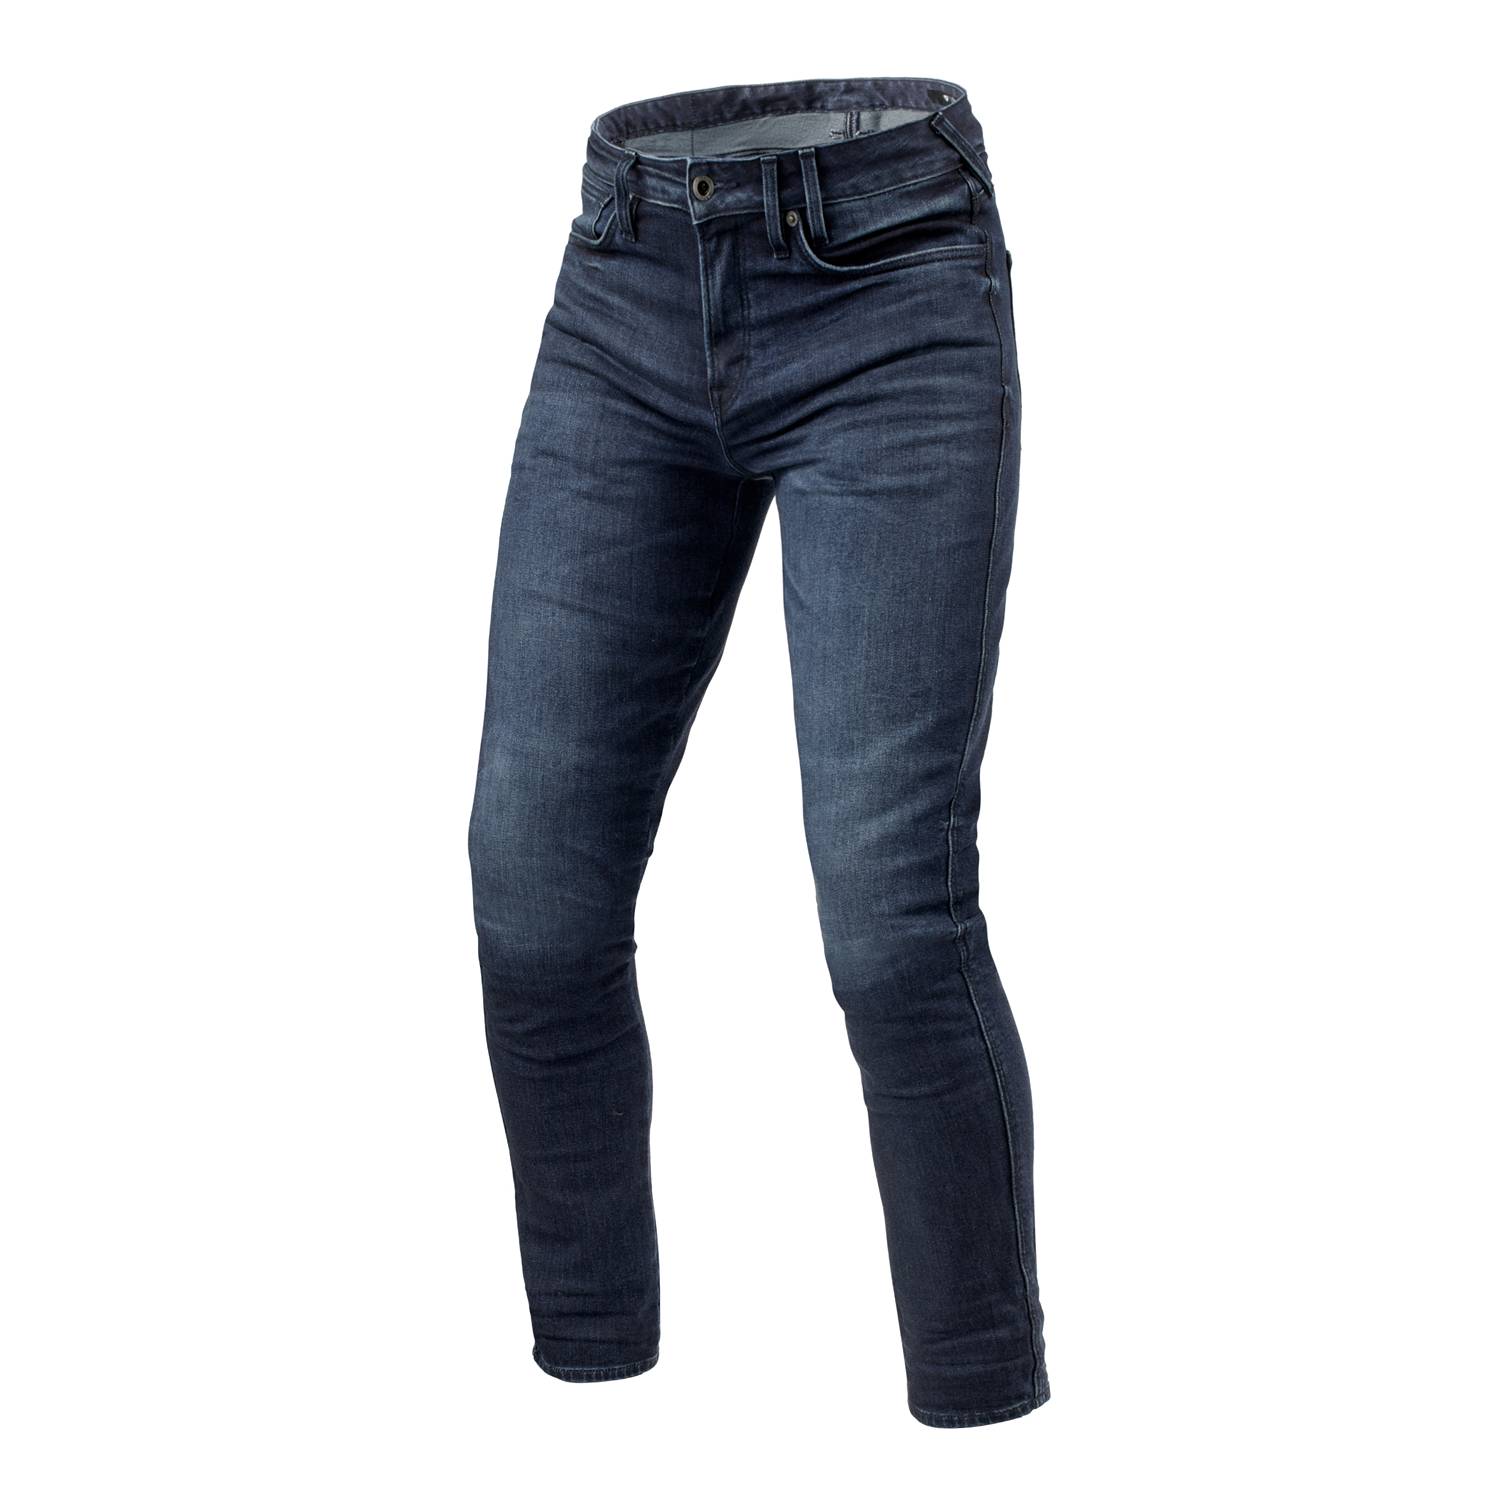 Image of REV'IT! Jeans Carlin SK Dark Blue Used L36 Motorcycle Jeans Talla L36/W31